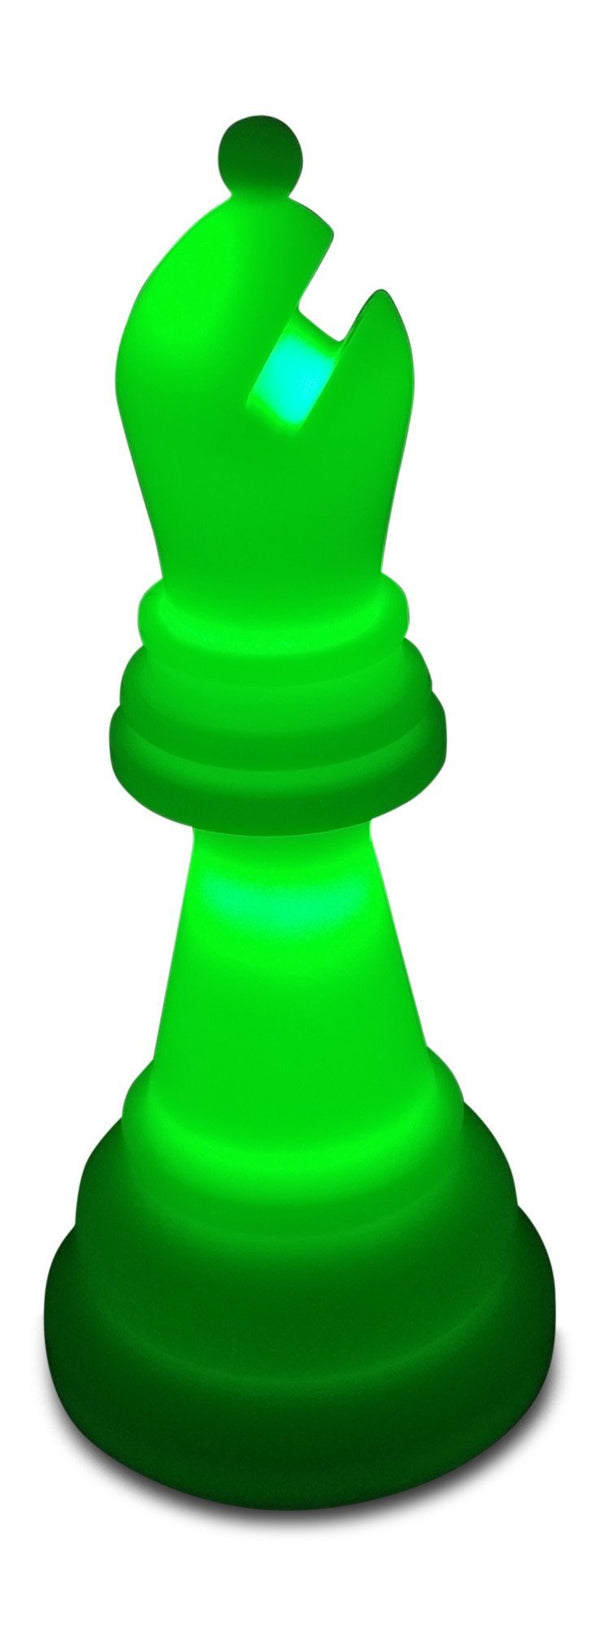 MegaChess 20 Inch Perfect Bishop Light-Up Giant Chess Piece - Green |  | MegaChess.com